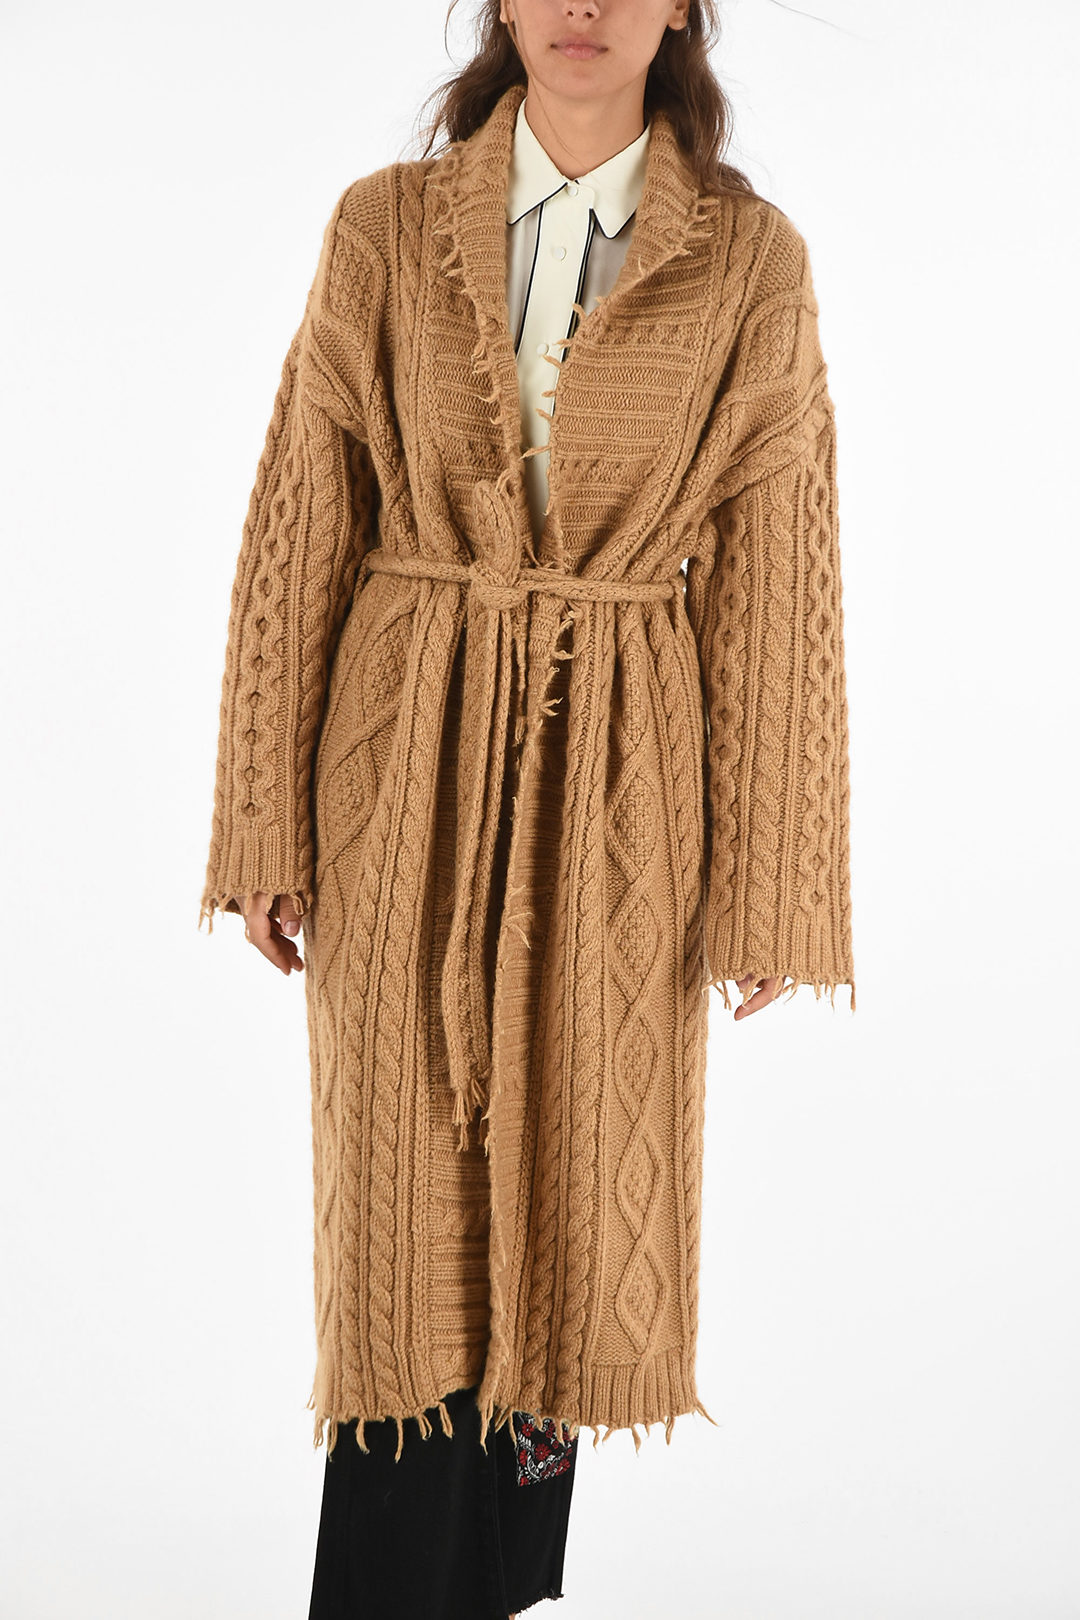 Alanui knit aran FISHERMAN coat with fabric belt women - Glamood Outlet